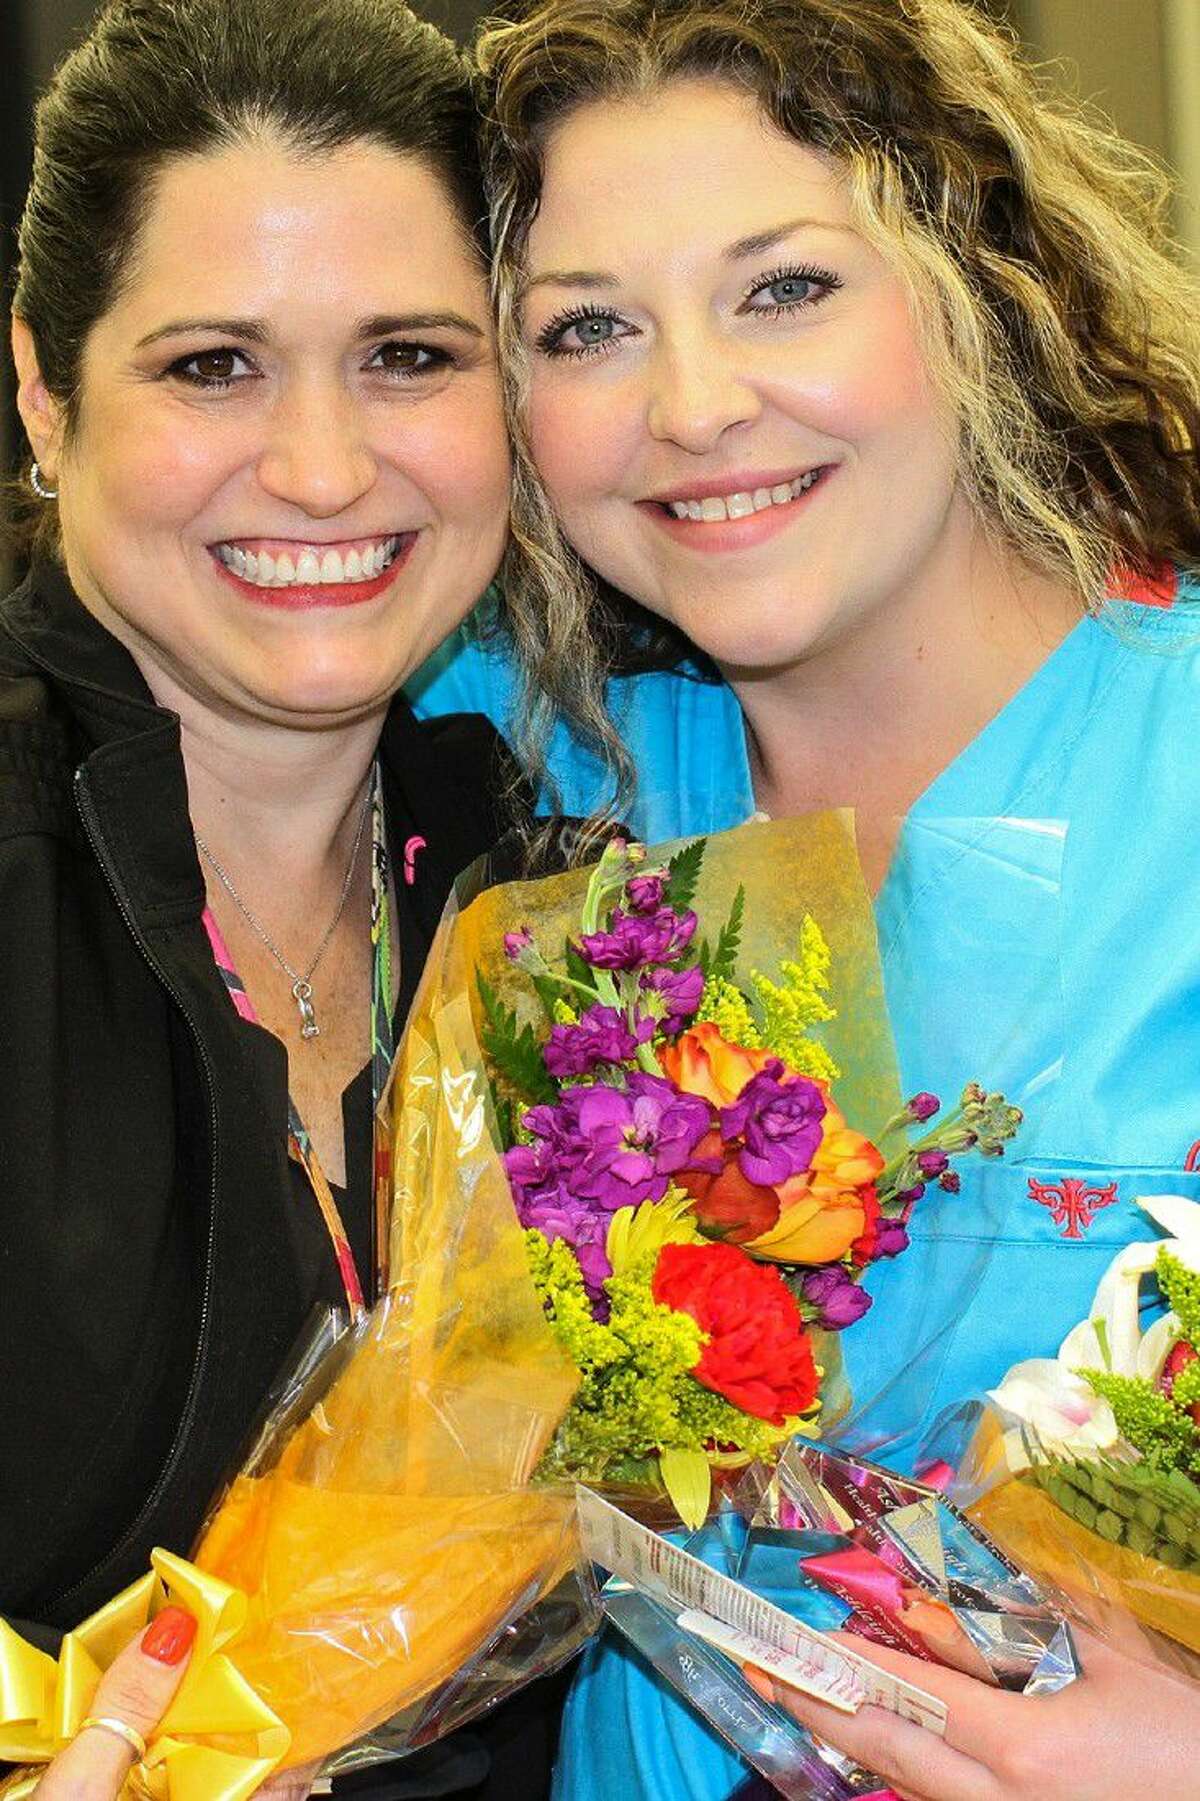 Teague Elementary nurse and mentor Nikki Seymour congratulates Fisher Elementary nurse Ashleigh Morris on her accomplishment.